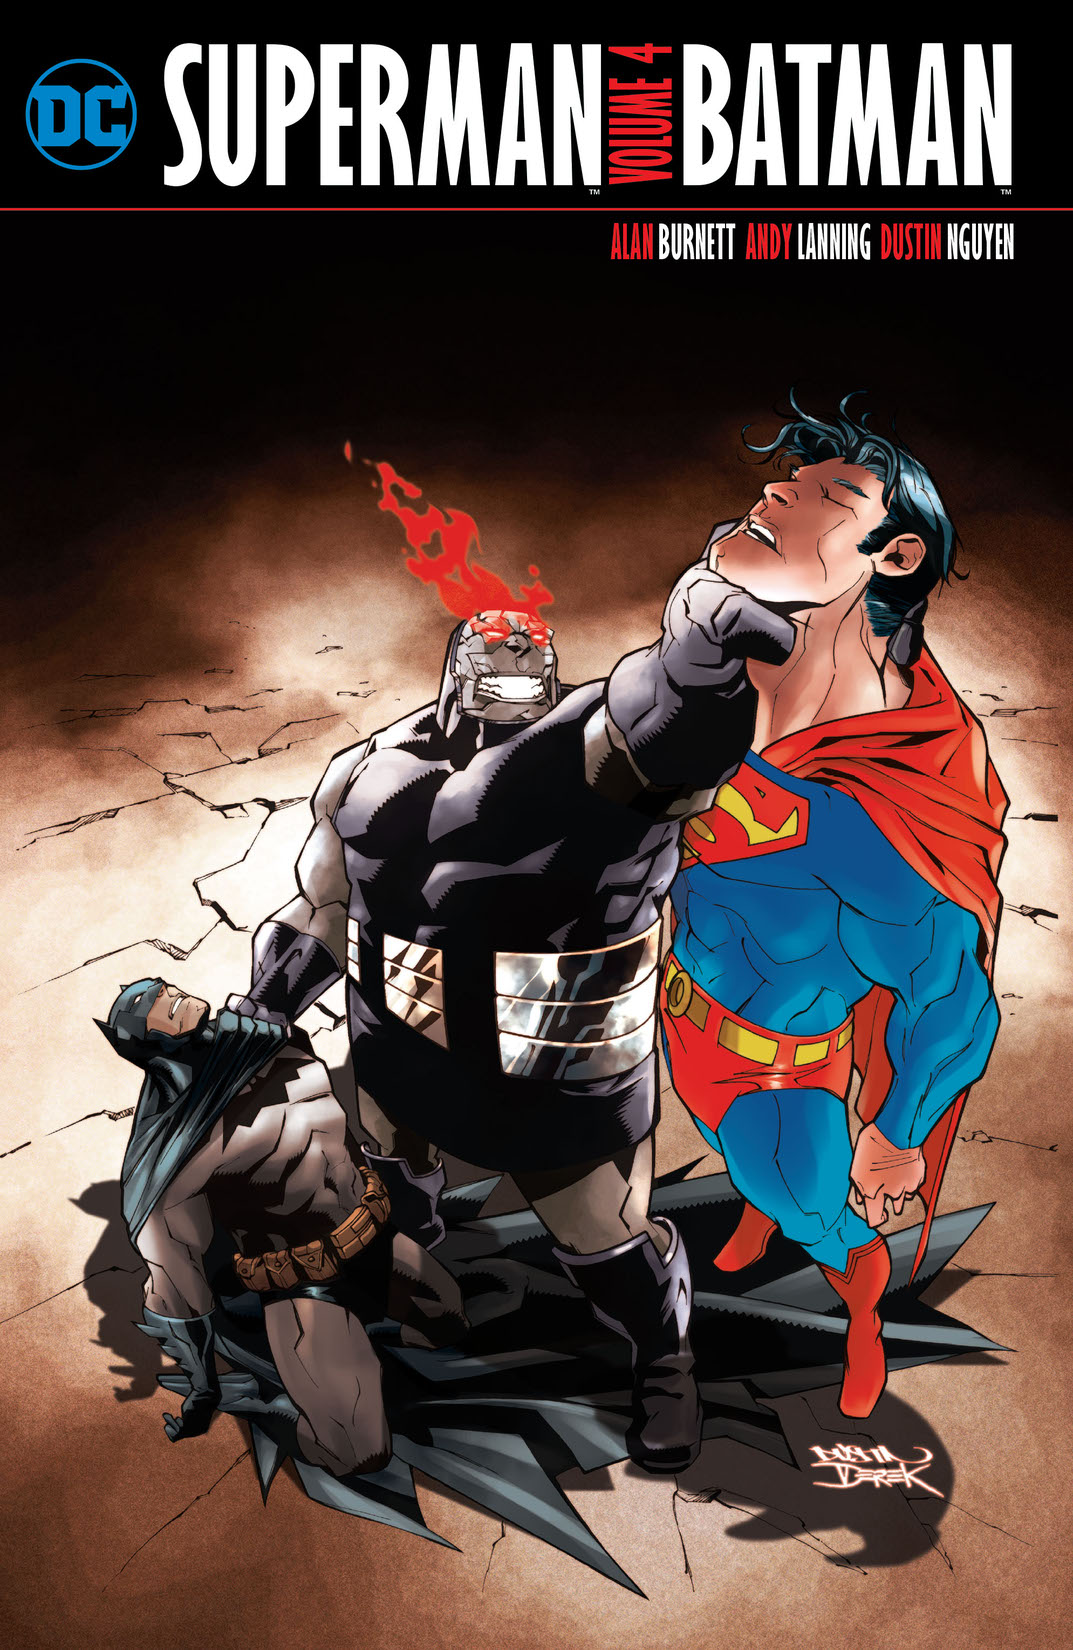 Superman/Batman Vol. 4 preview images